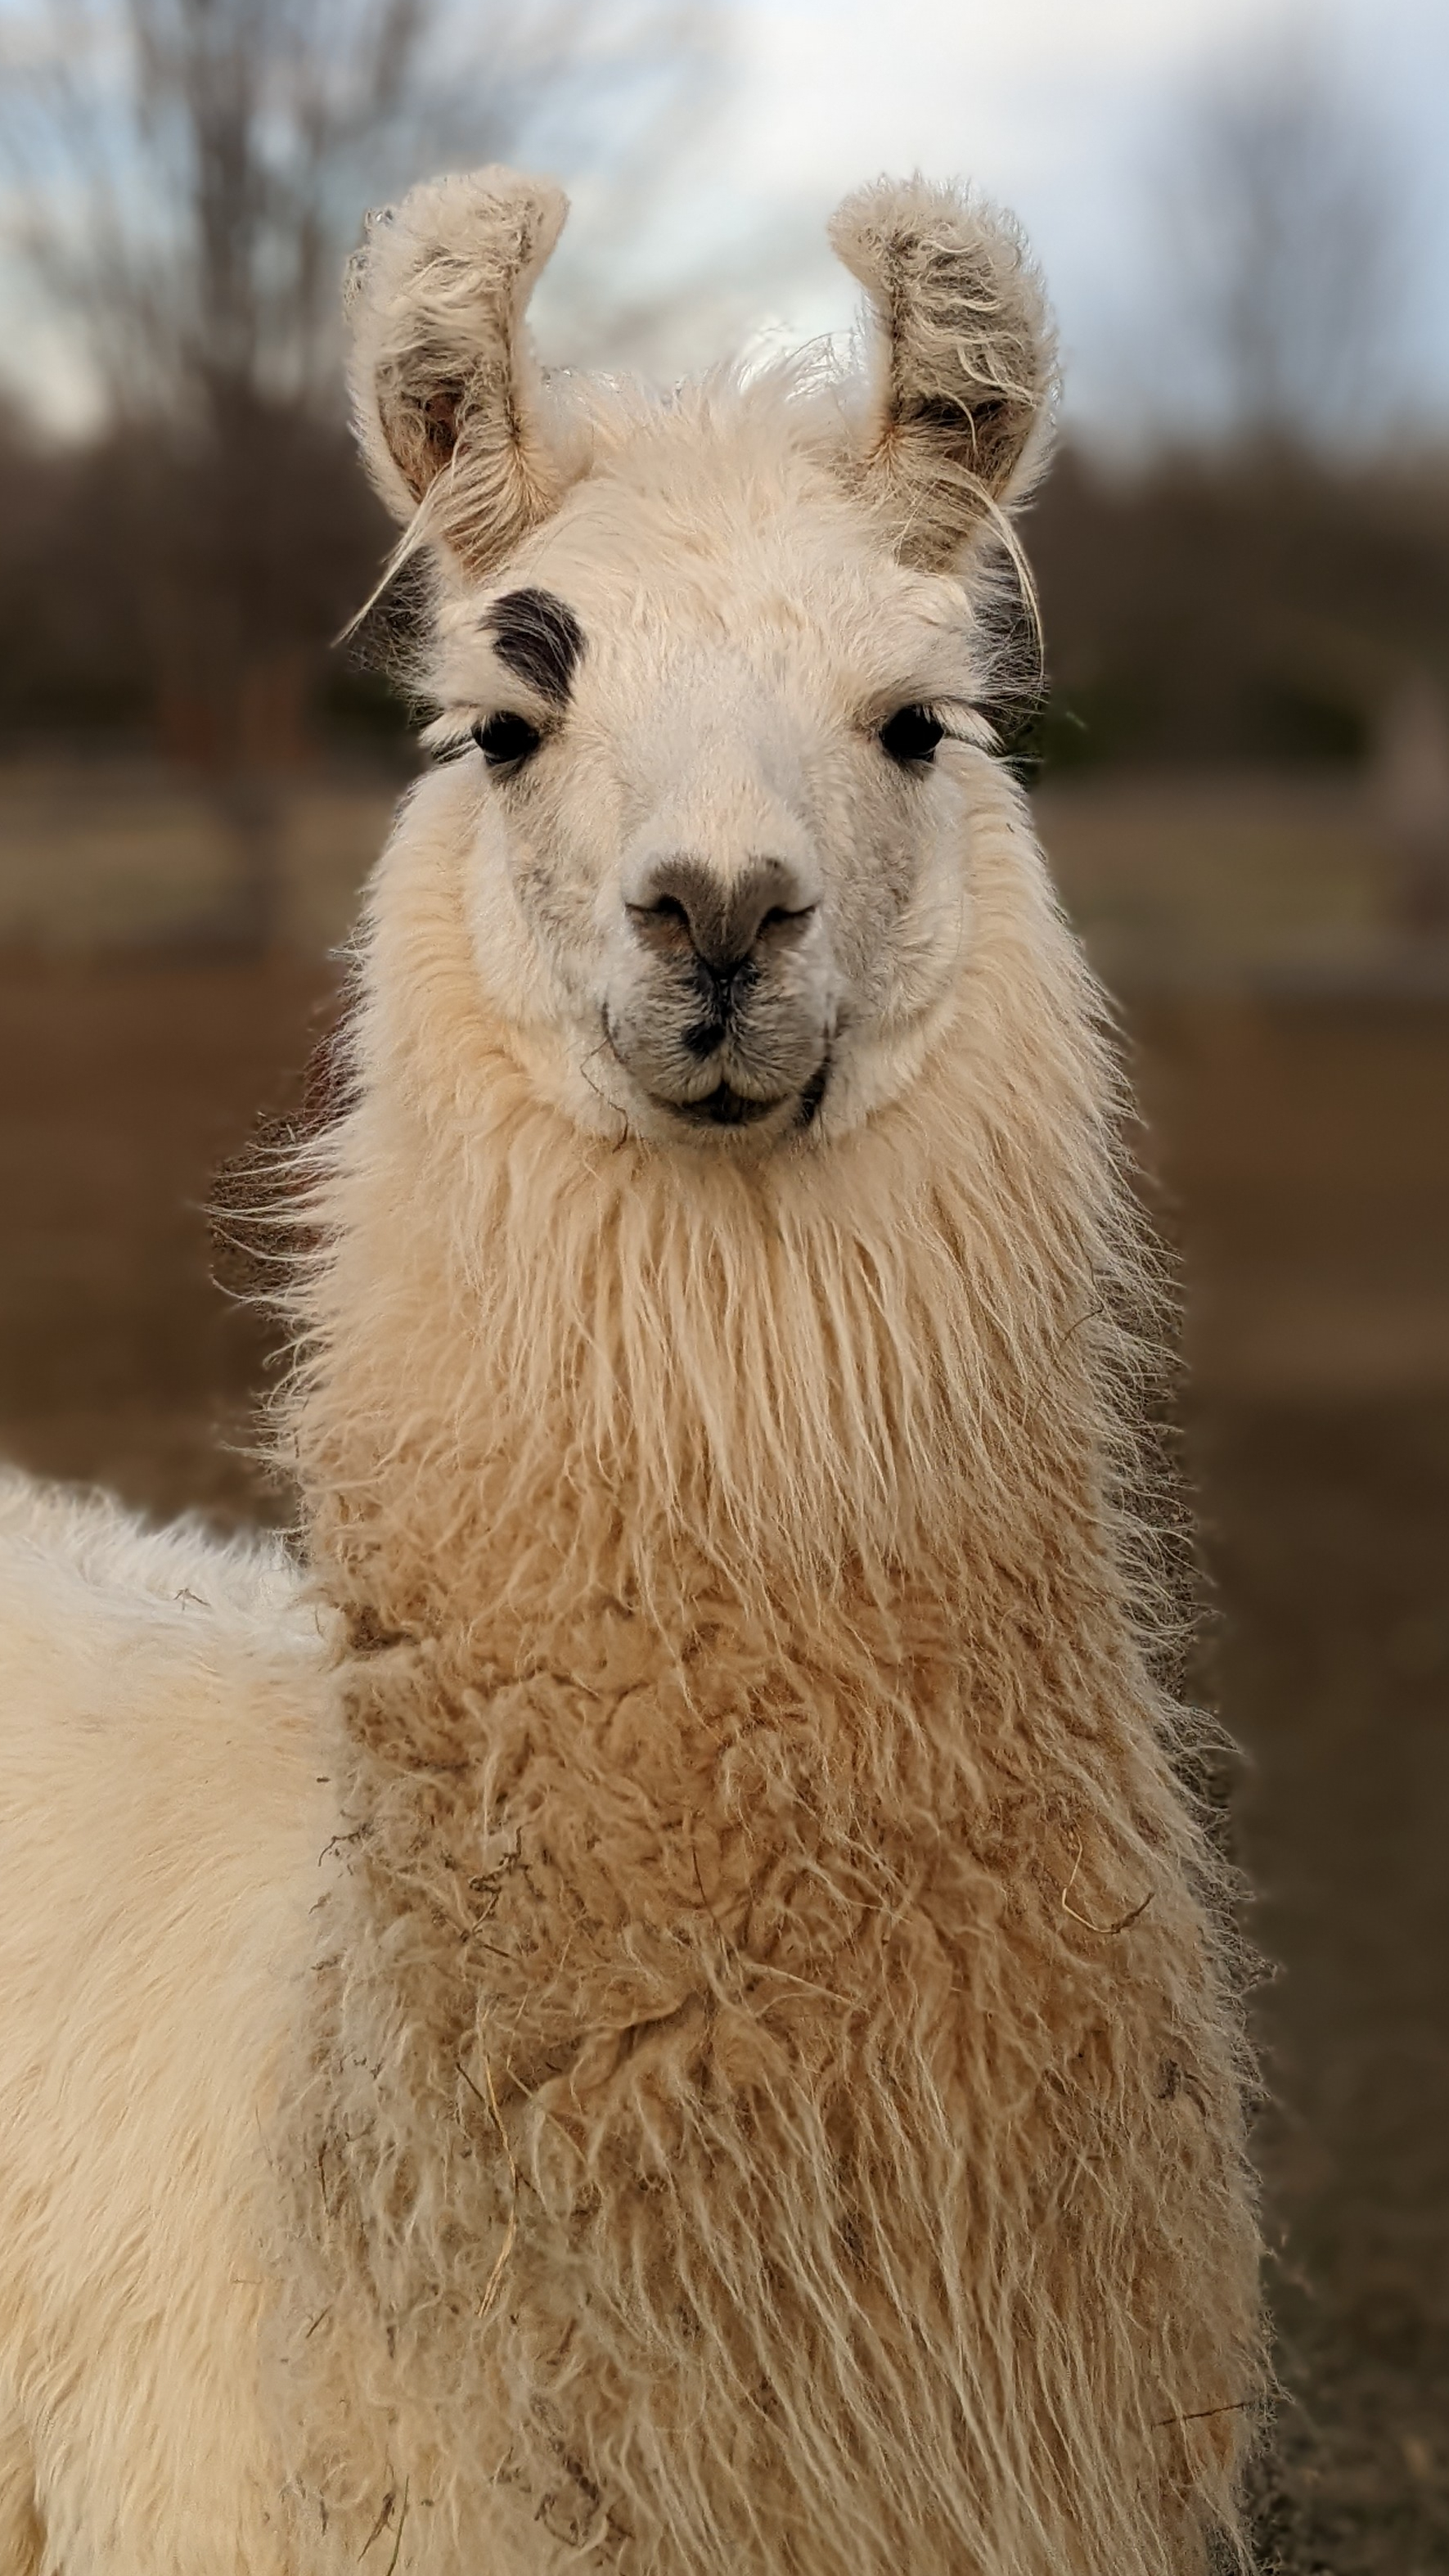 A portrait image of a llama named Hushabye